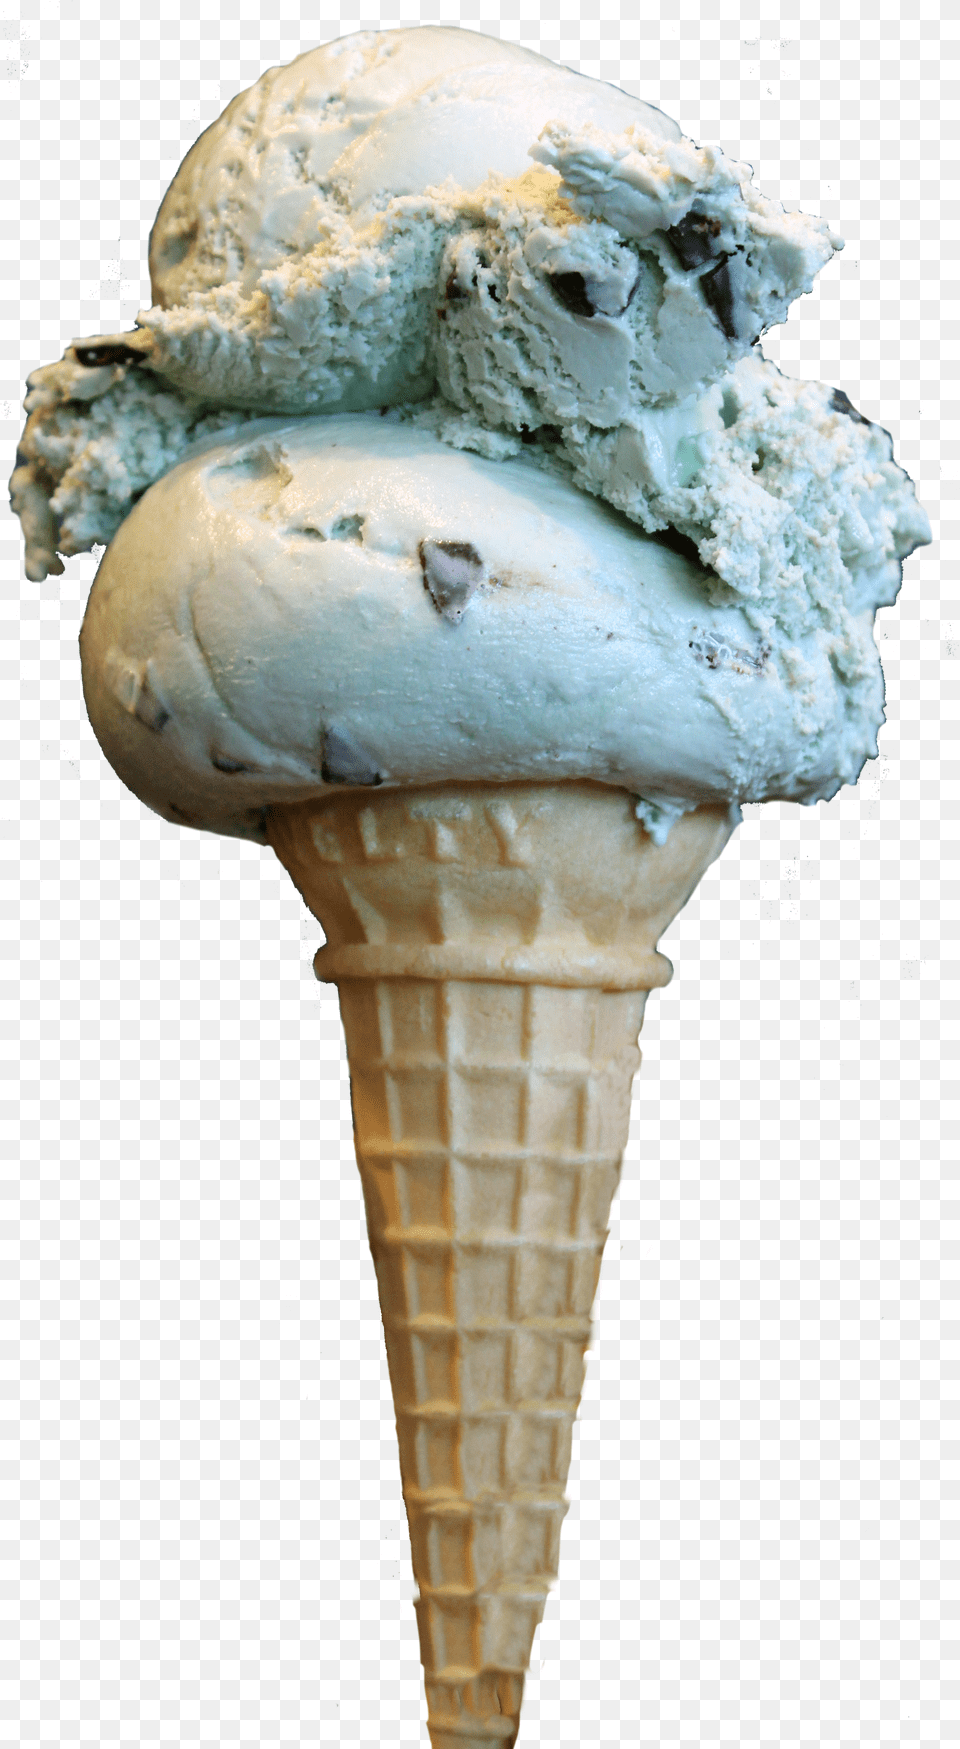 Ice Cream Cone Png